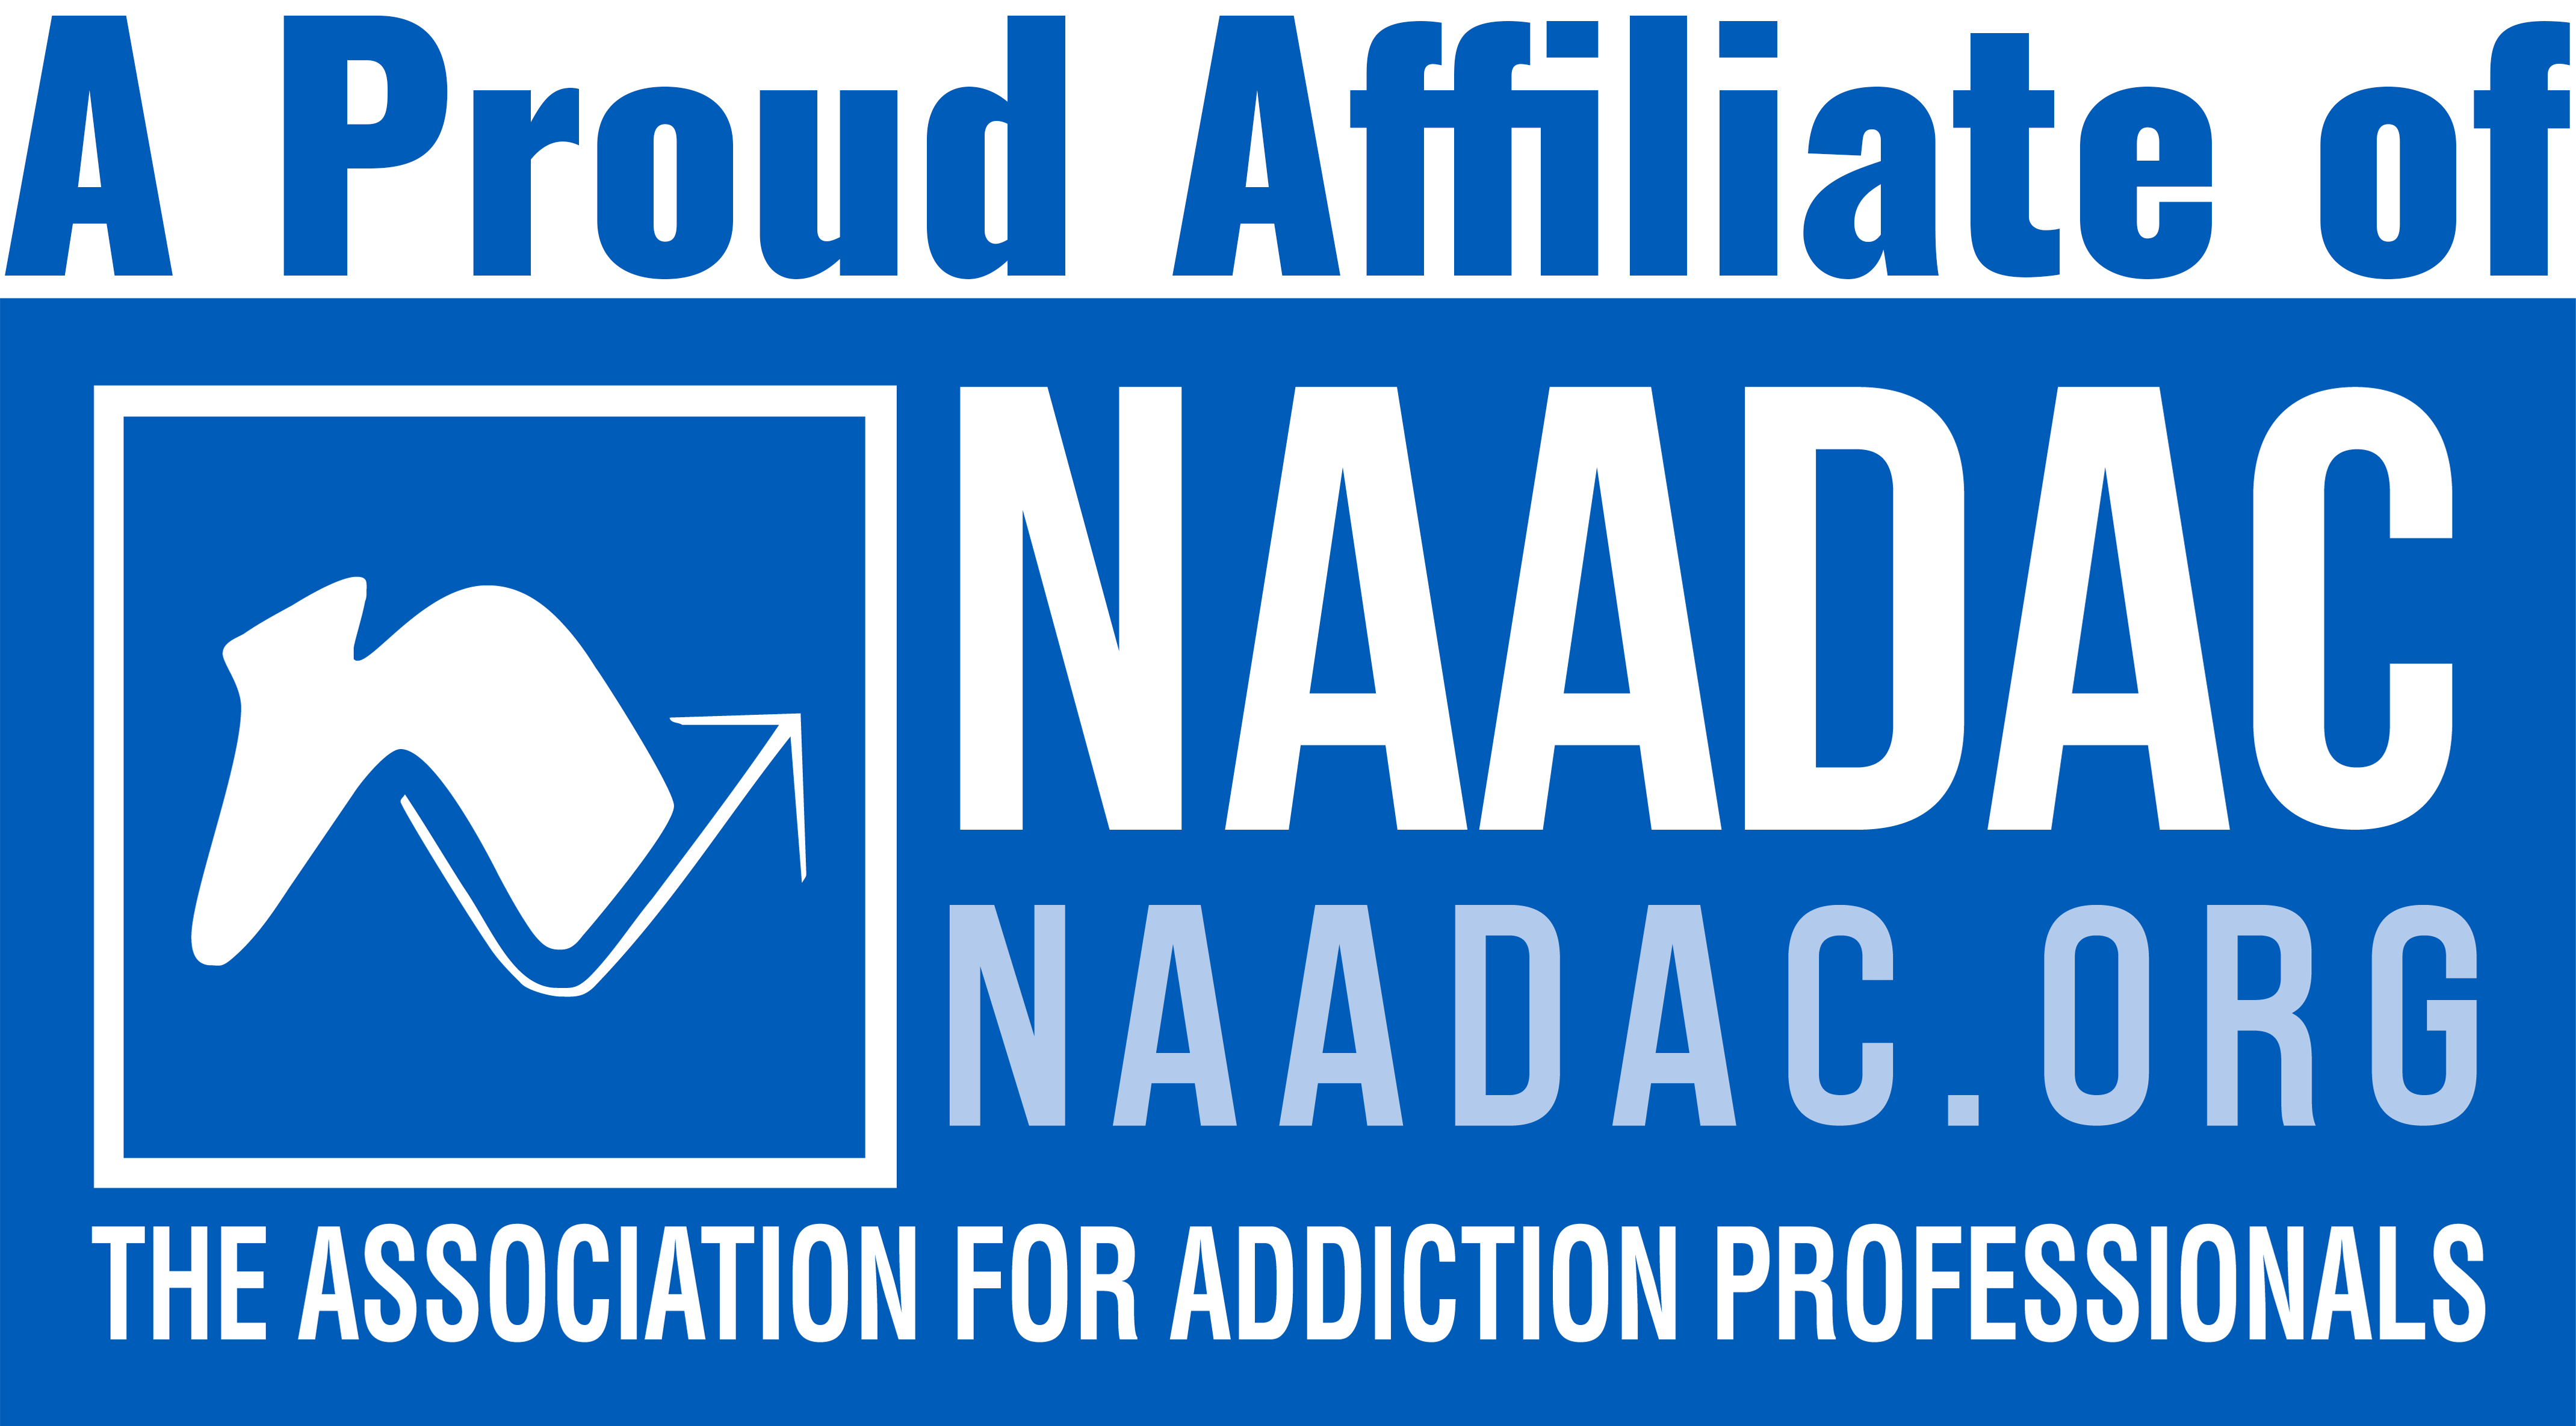 NAADAC - NAADAC.ORG - The Association for Addiction Professionals